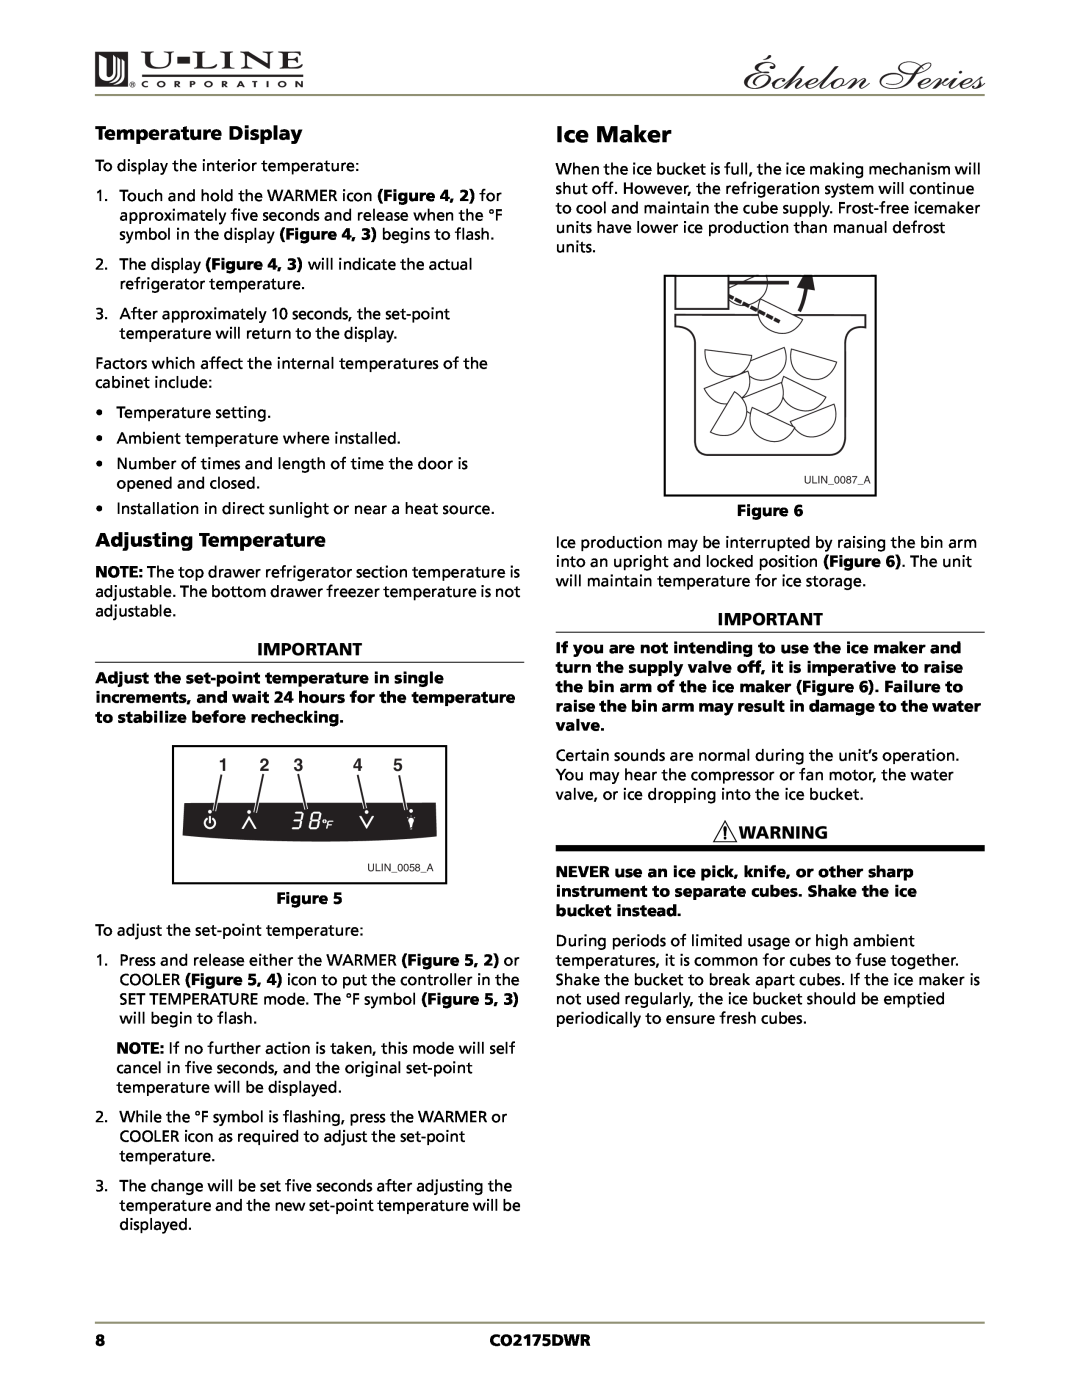 U-Line CO2175DWR manual Ice Maker, Temperature Display, Adjusting Temperature 